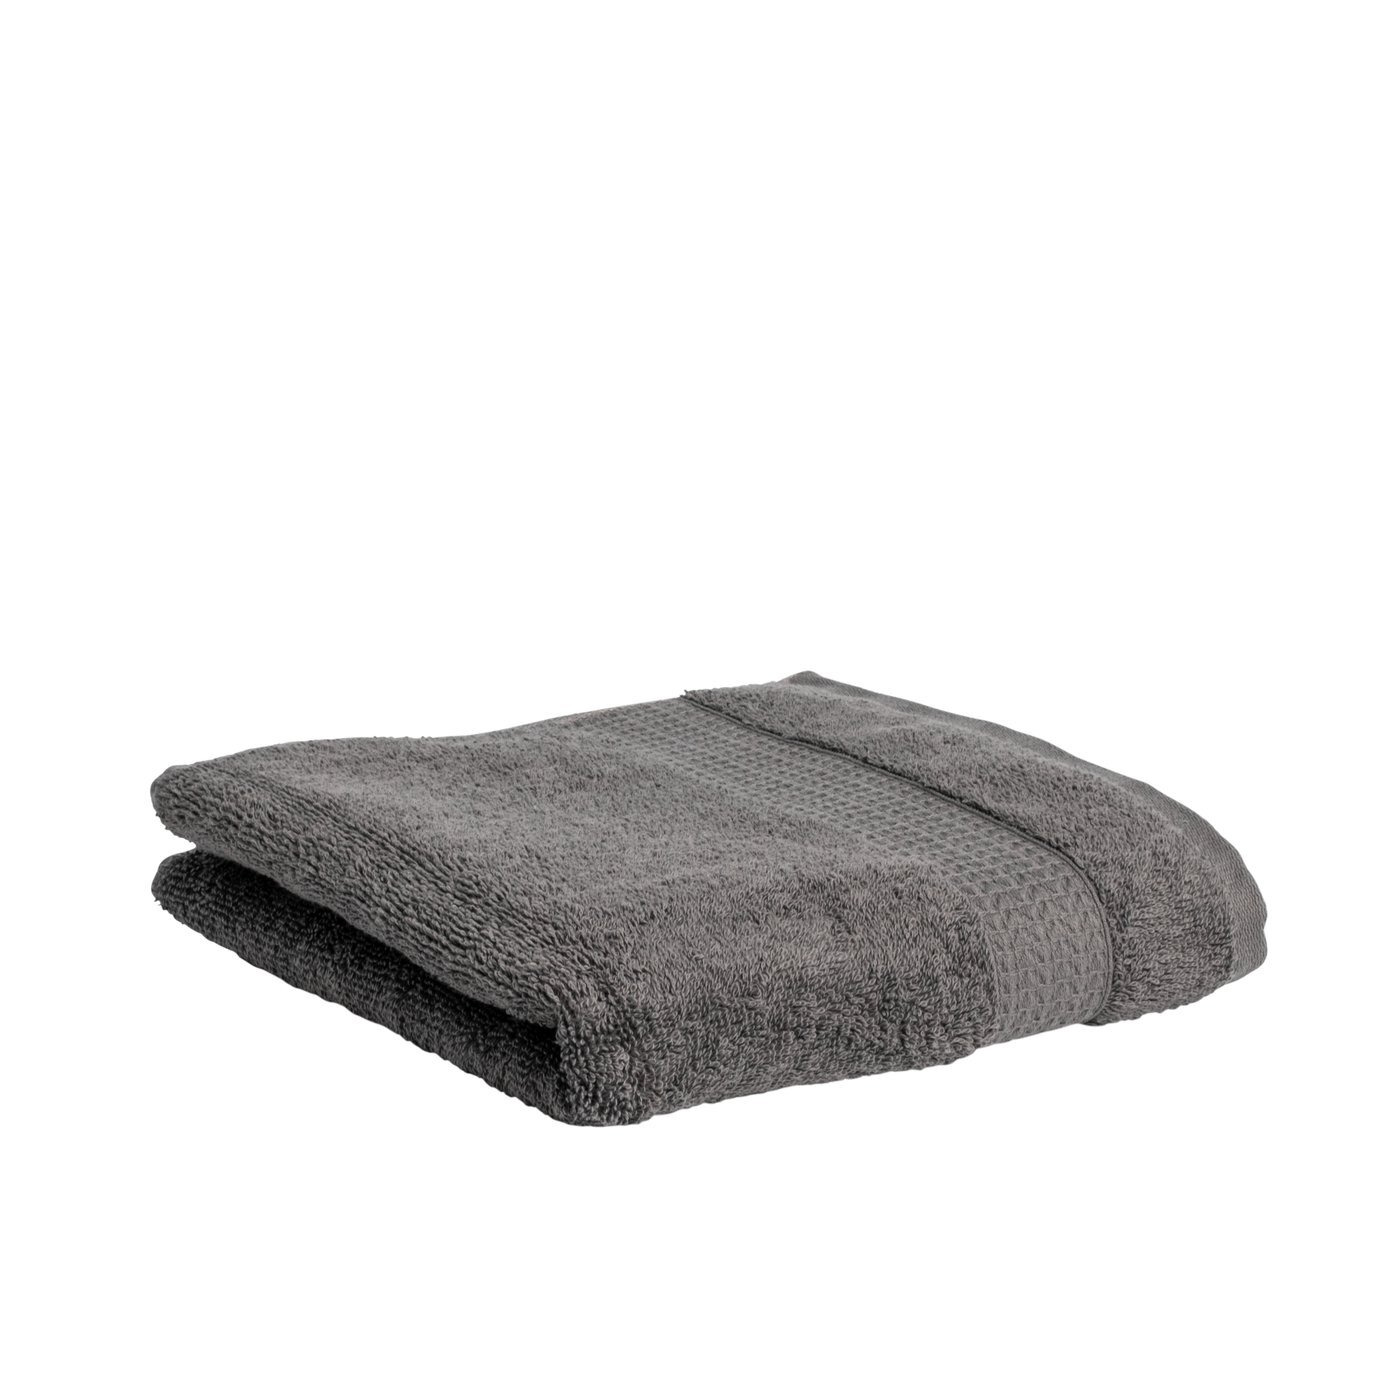 Habitat Hygro Anti Bac Hand Towel - Grey - image 1